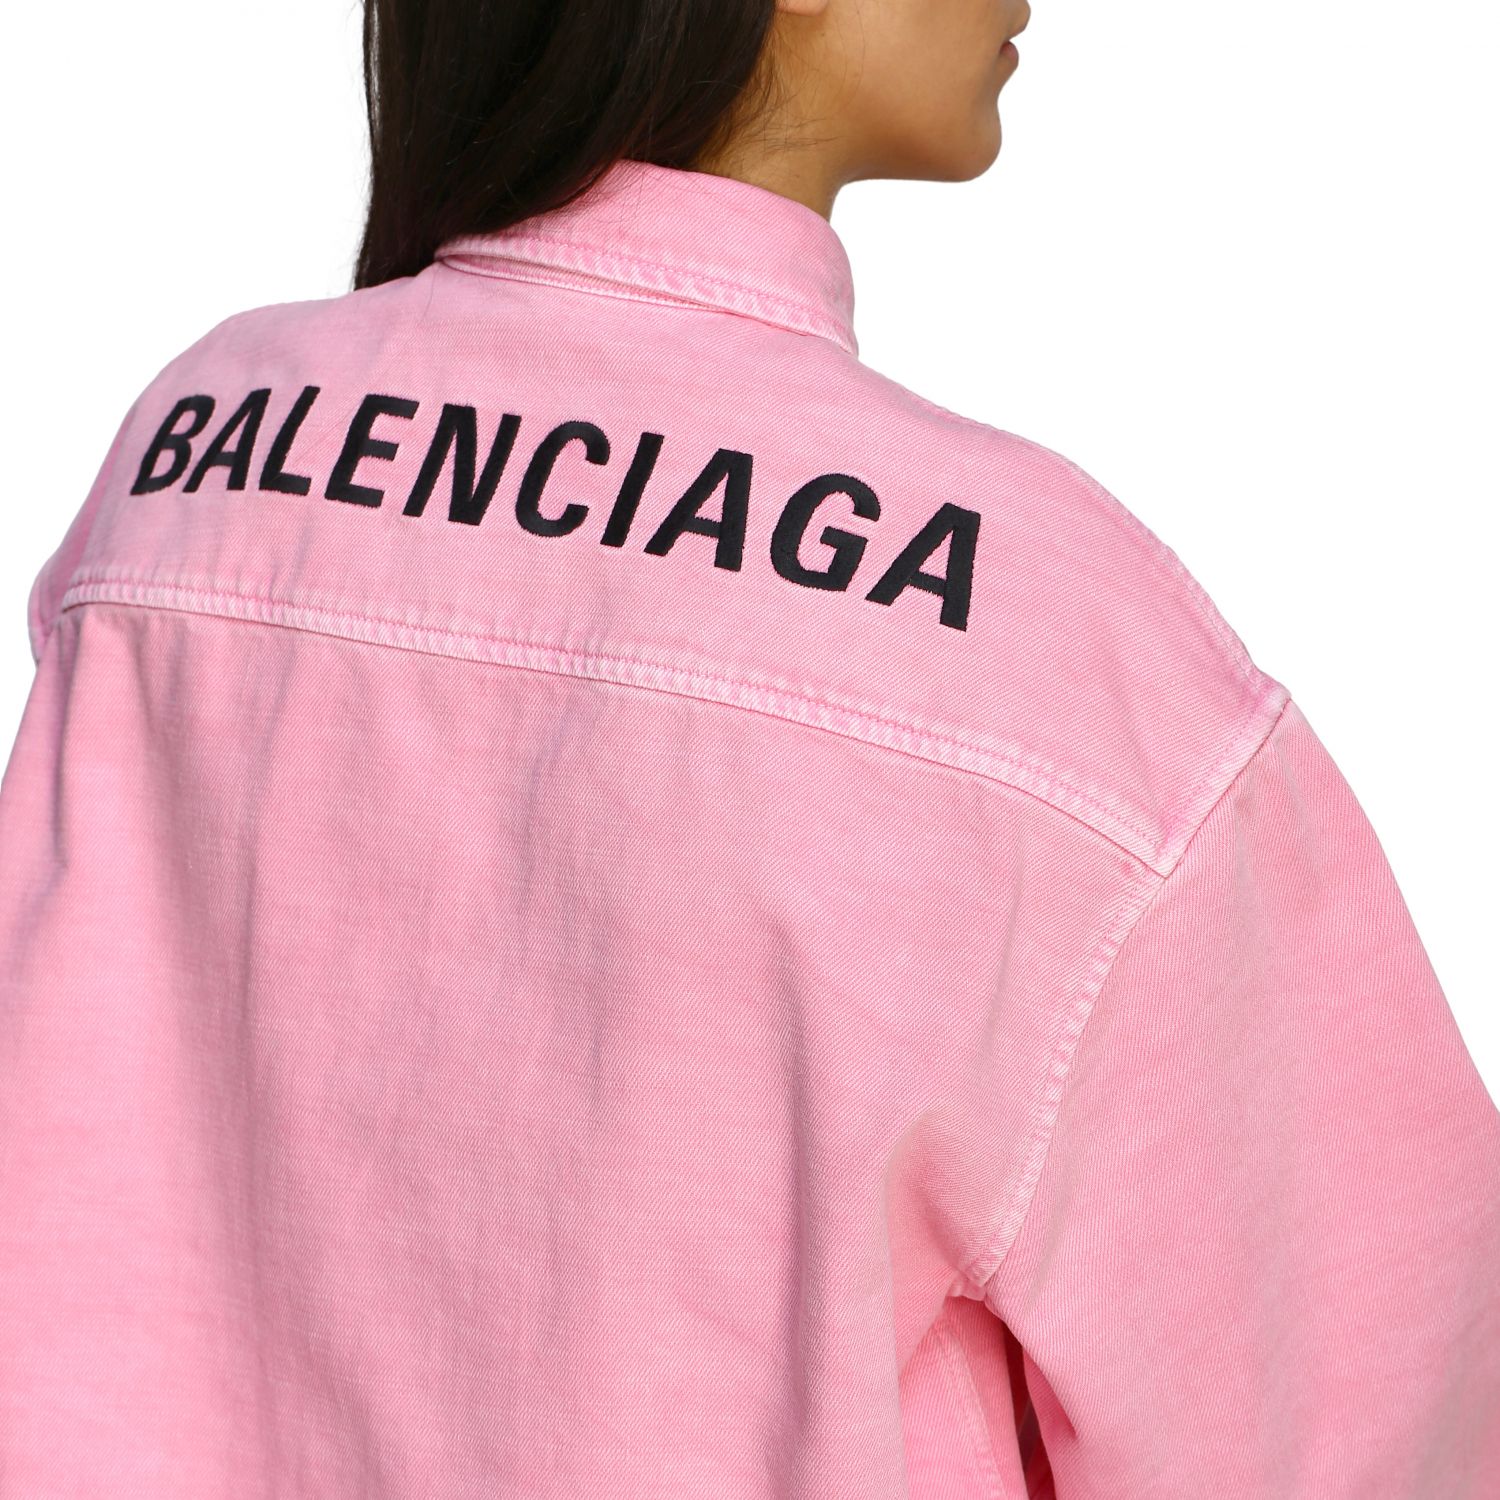 衬衫 Balenciaga: Balenciaga delavé牛仔衬衫 粉色 5